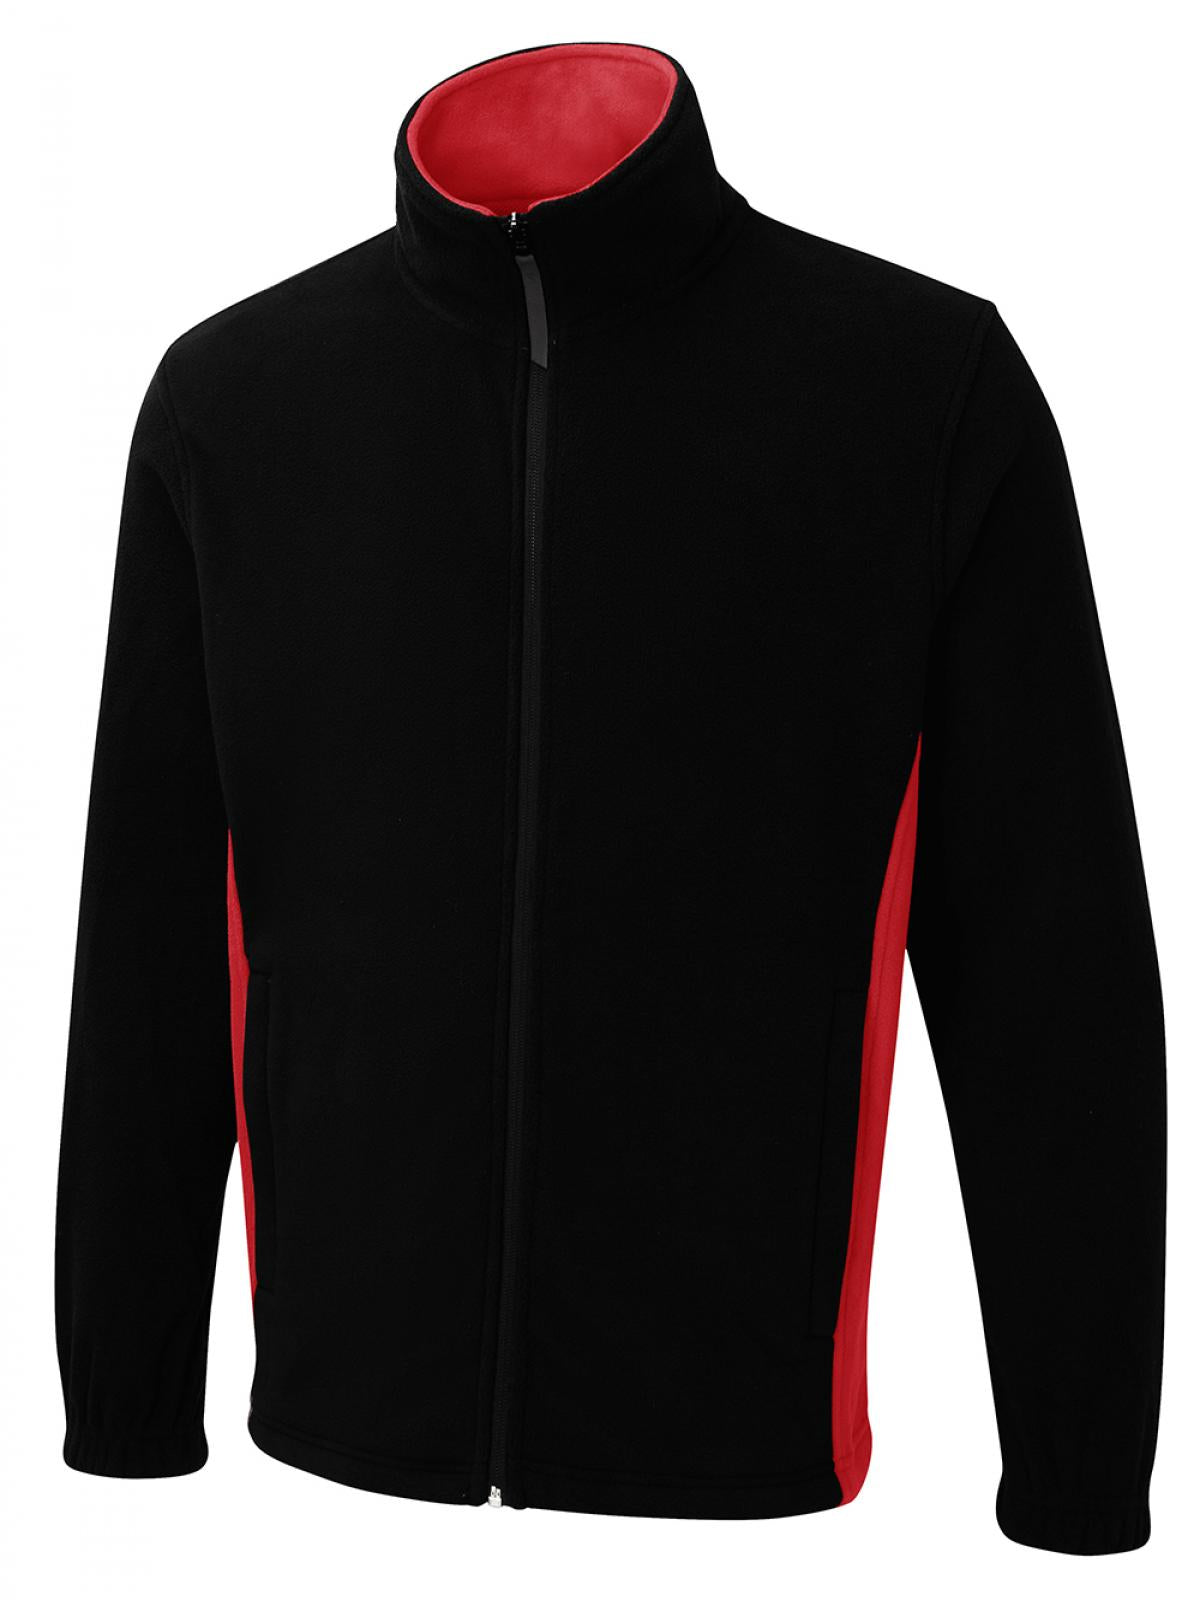 Uneek Two Tone Full Zip Fleece Jacket UC617 - Black/Red